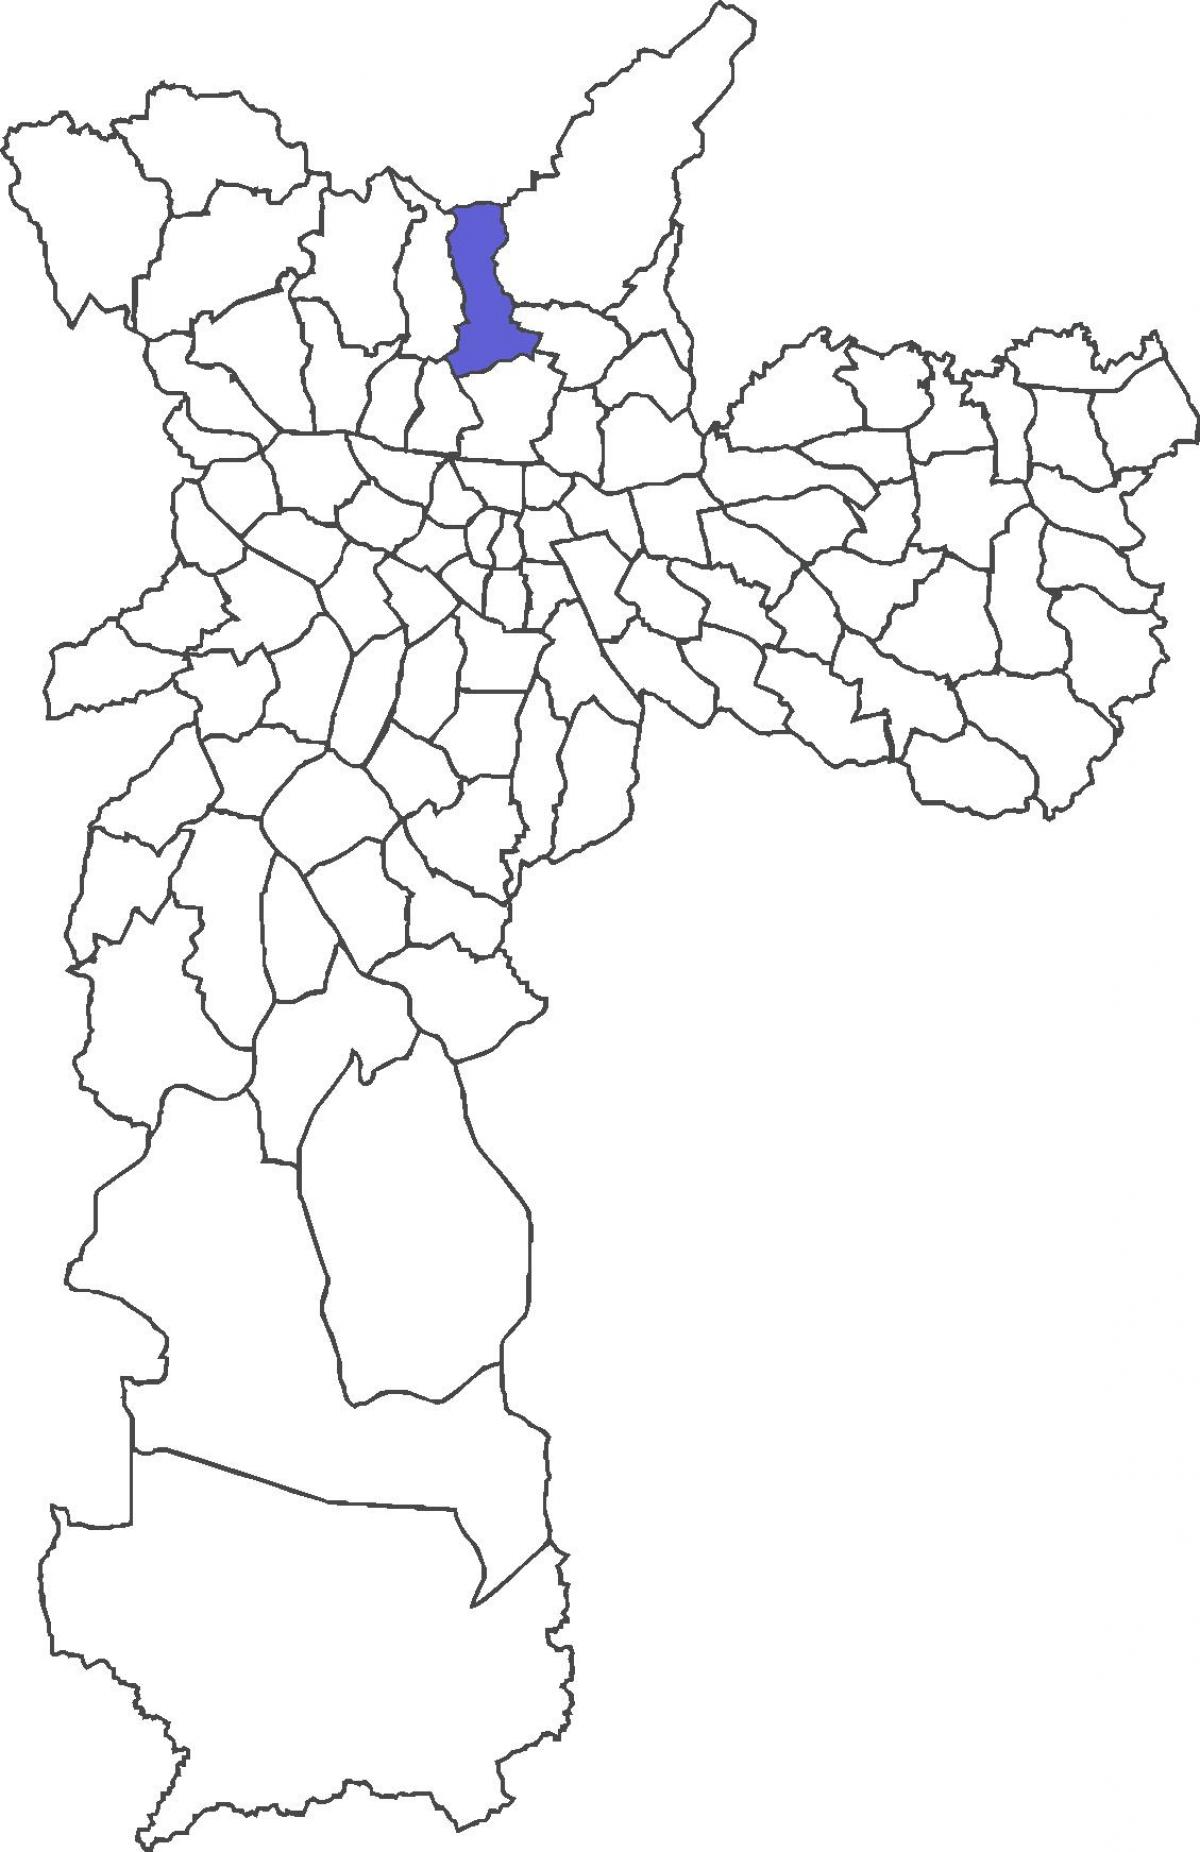 Kart over distriktet Mandaqui